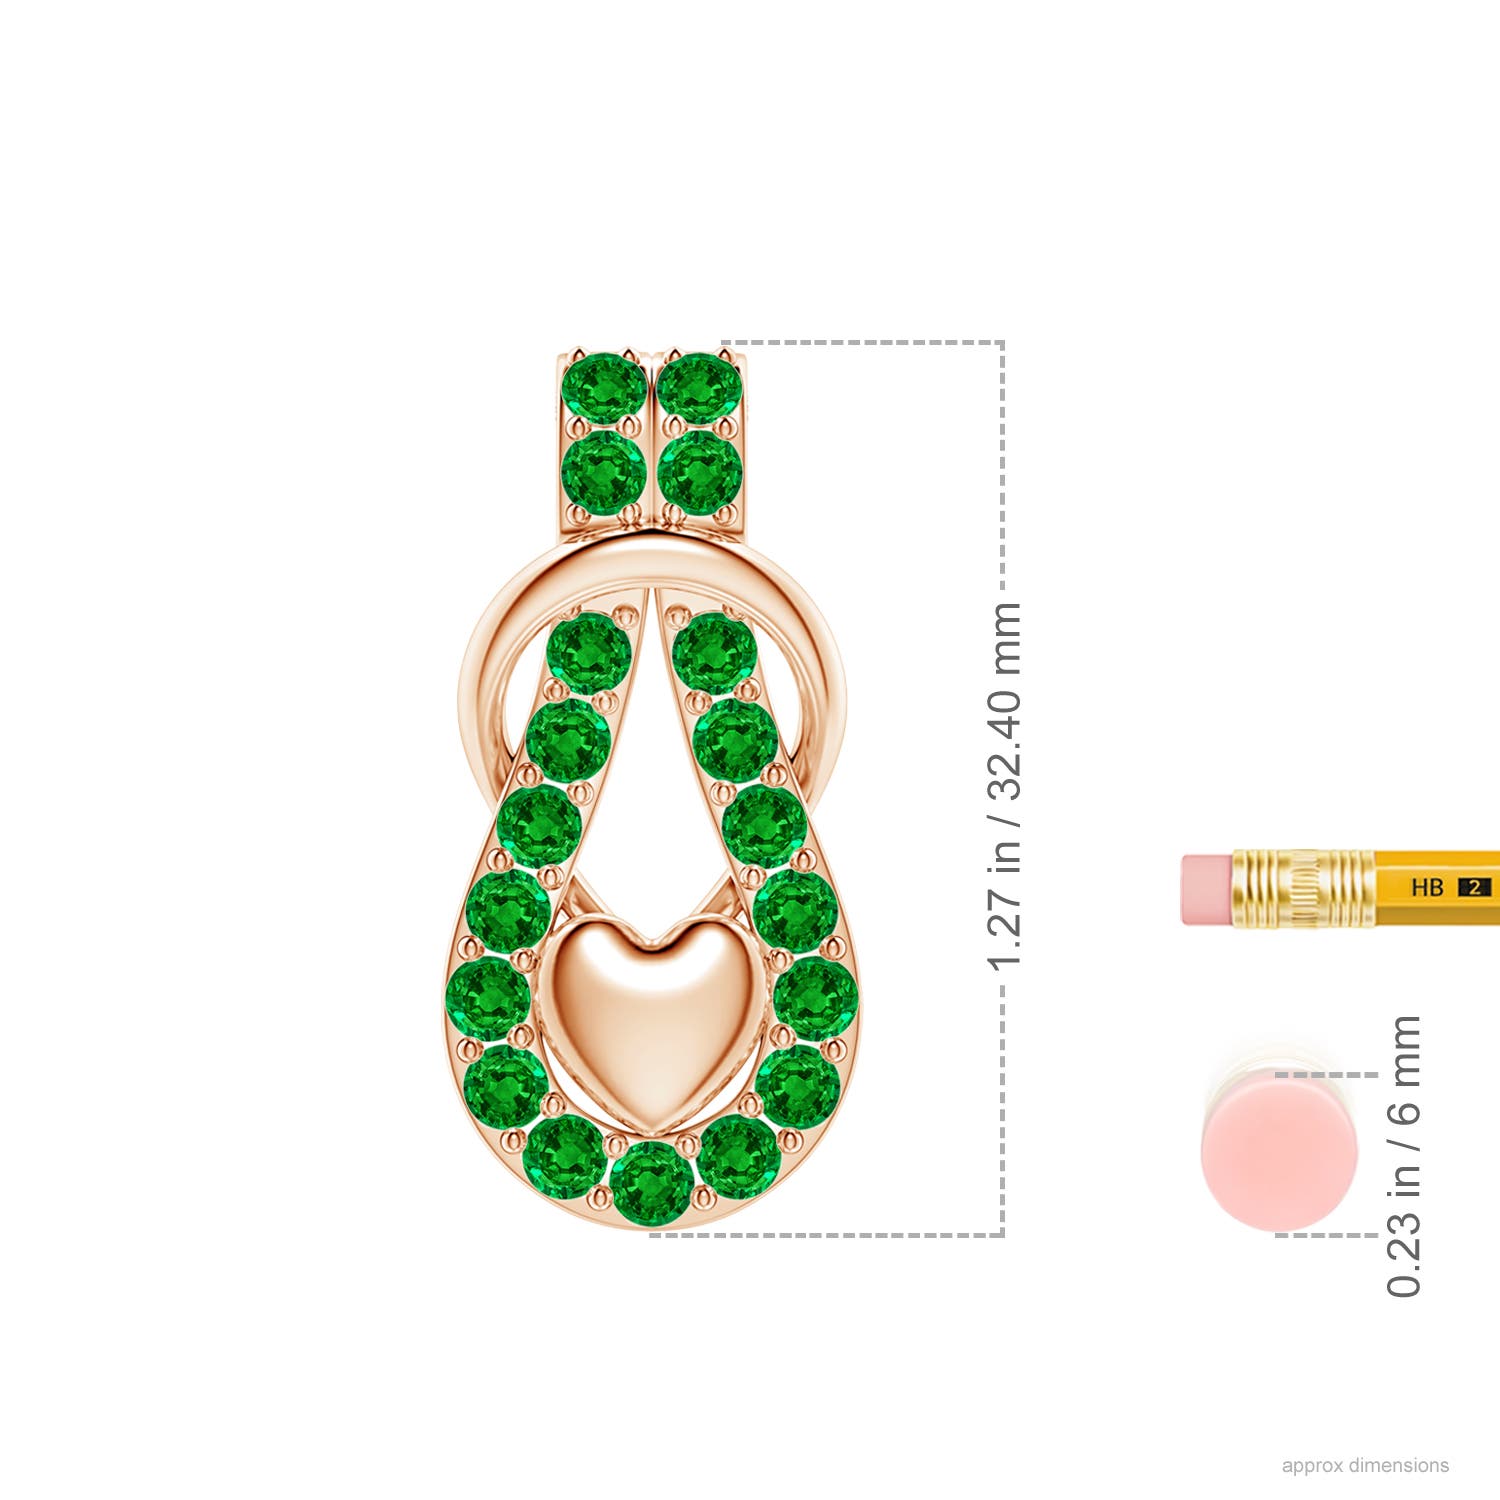 AAAA - Emerald / 1.9 CT / 18 KT Rose Gold